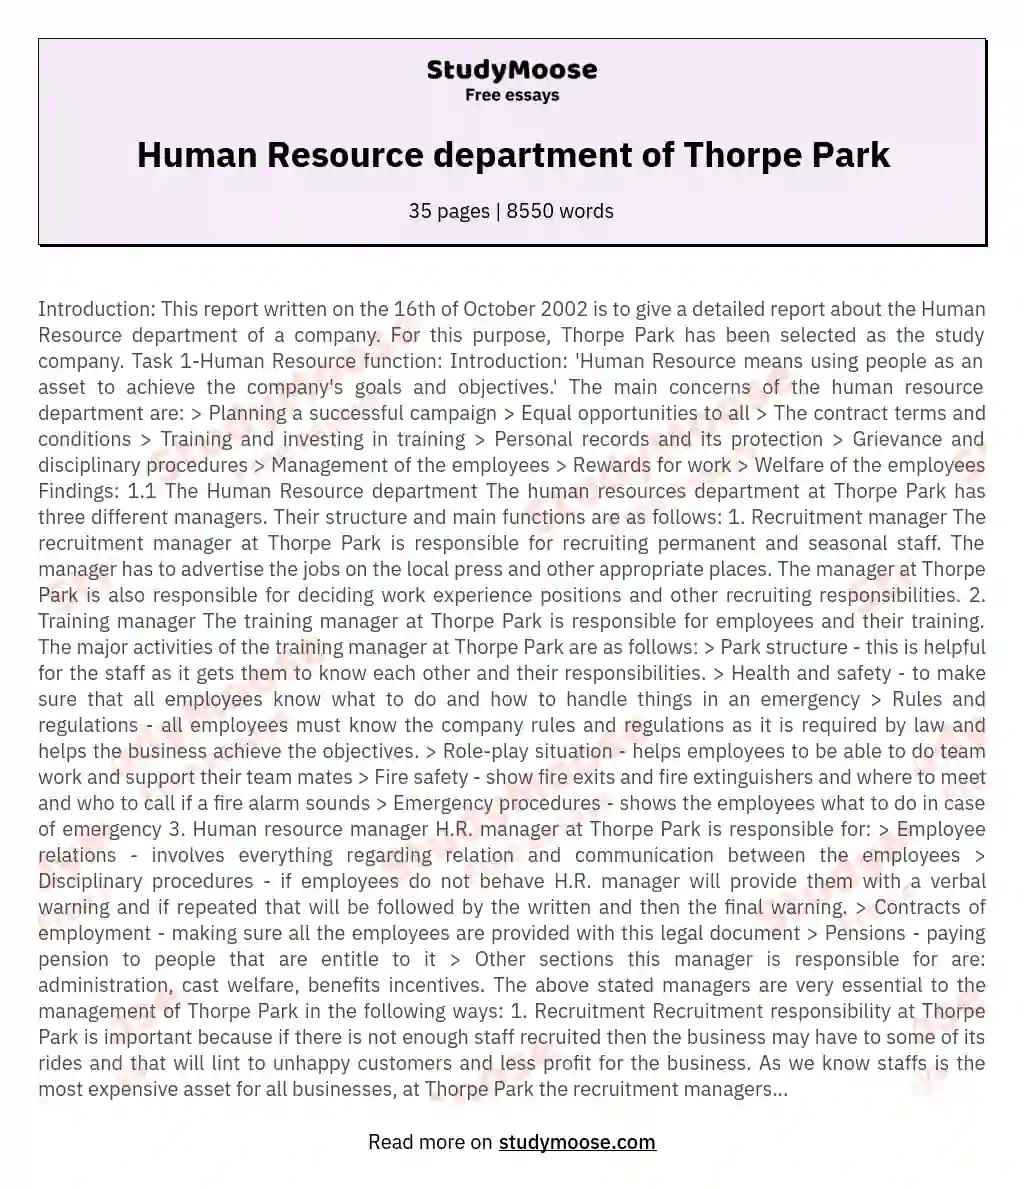 Human Resource department of Thorpe Park